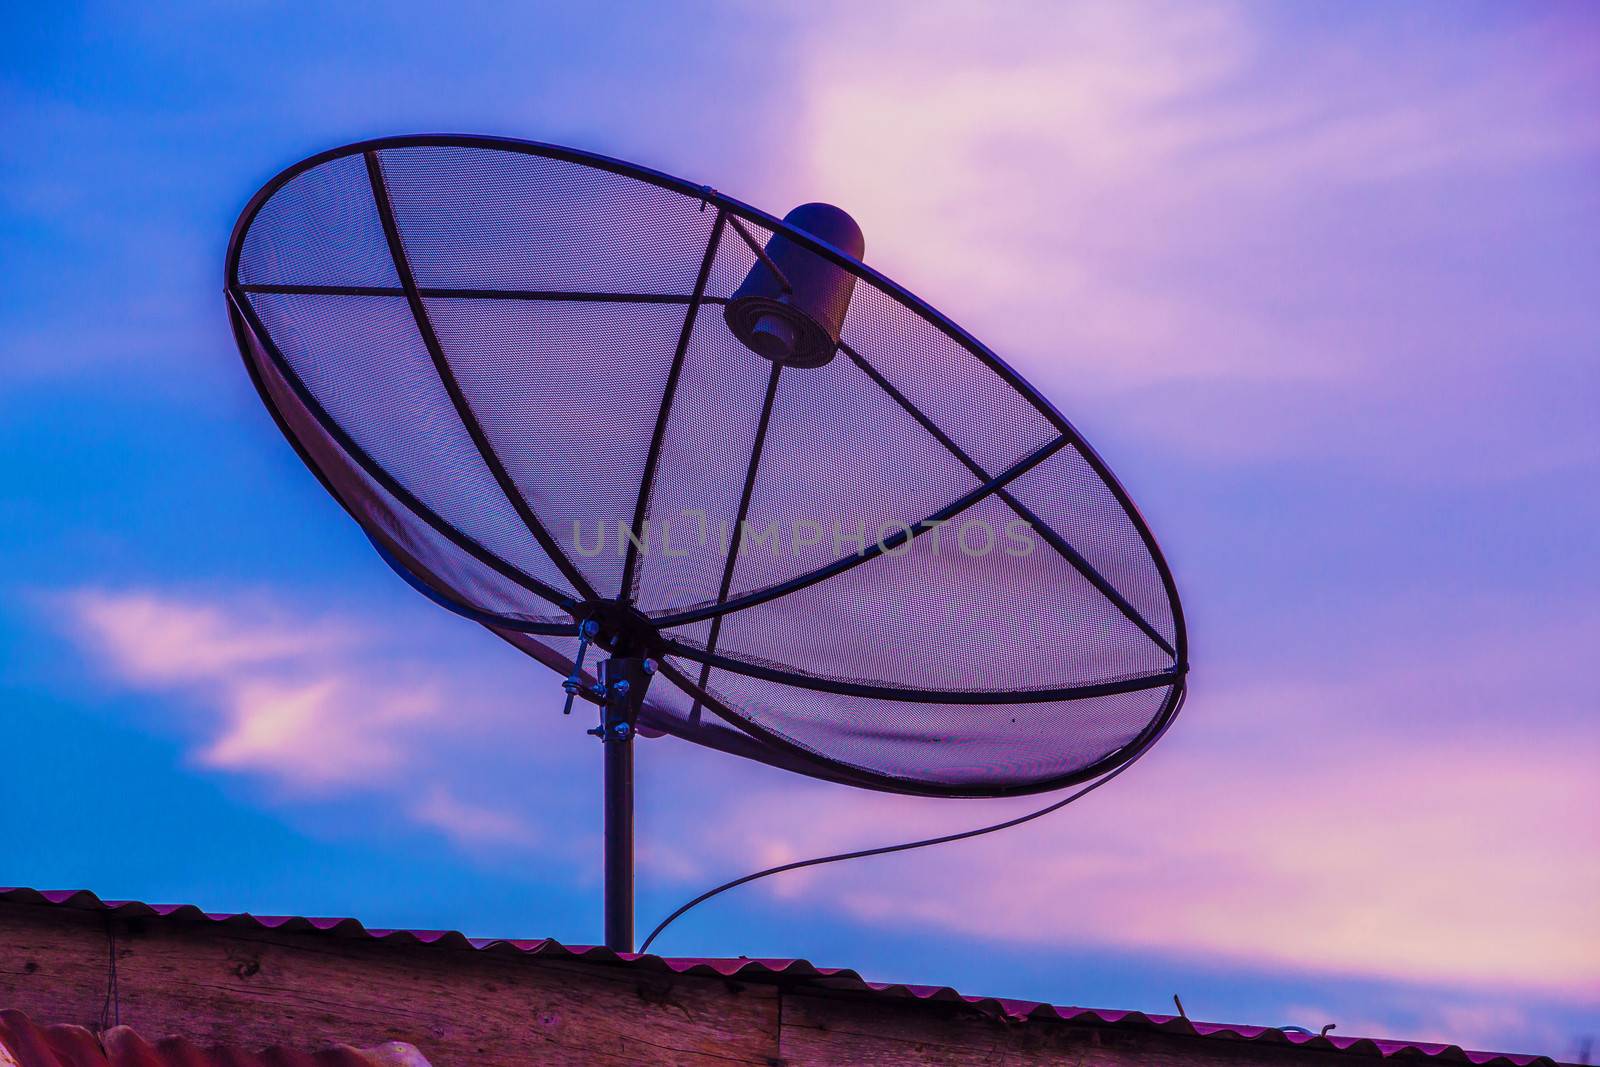 Television Satellite dish in twilight sky